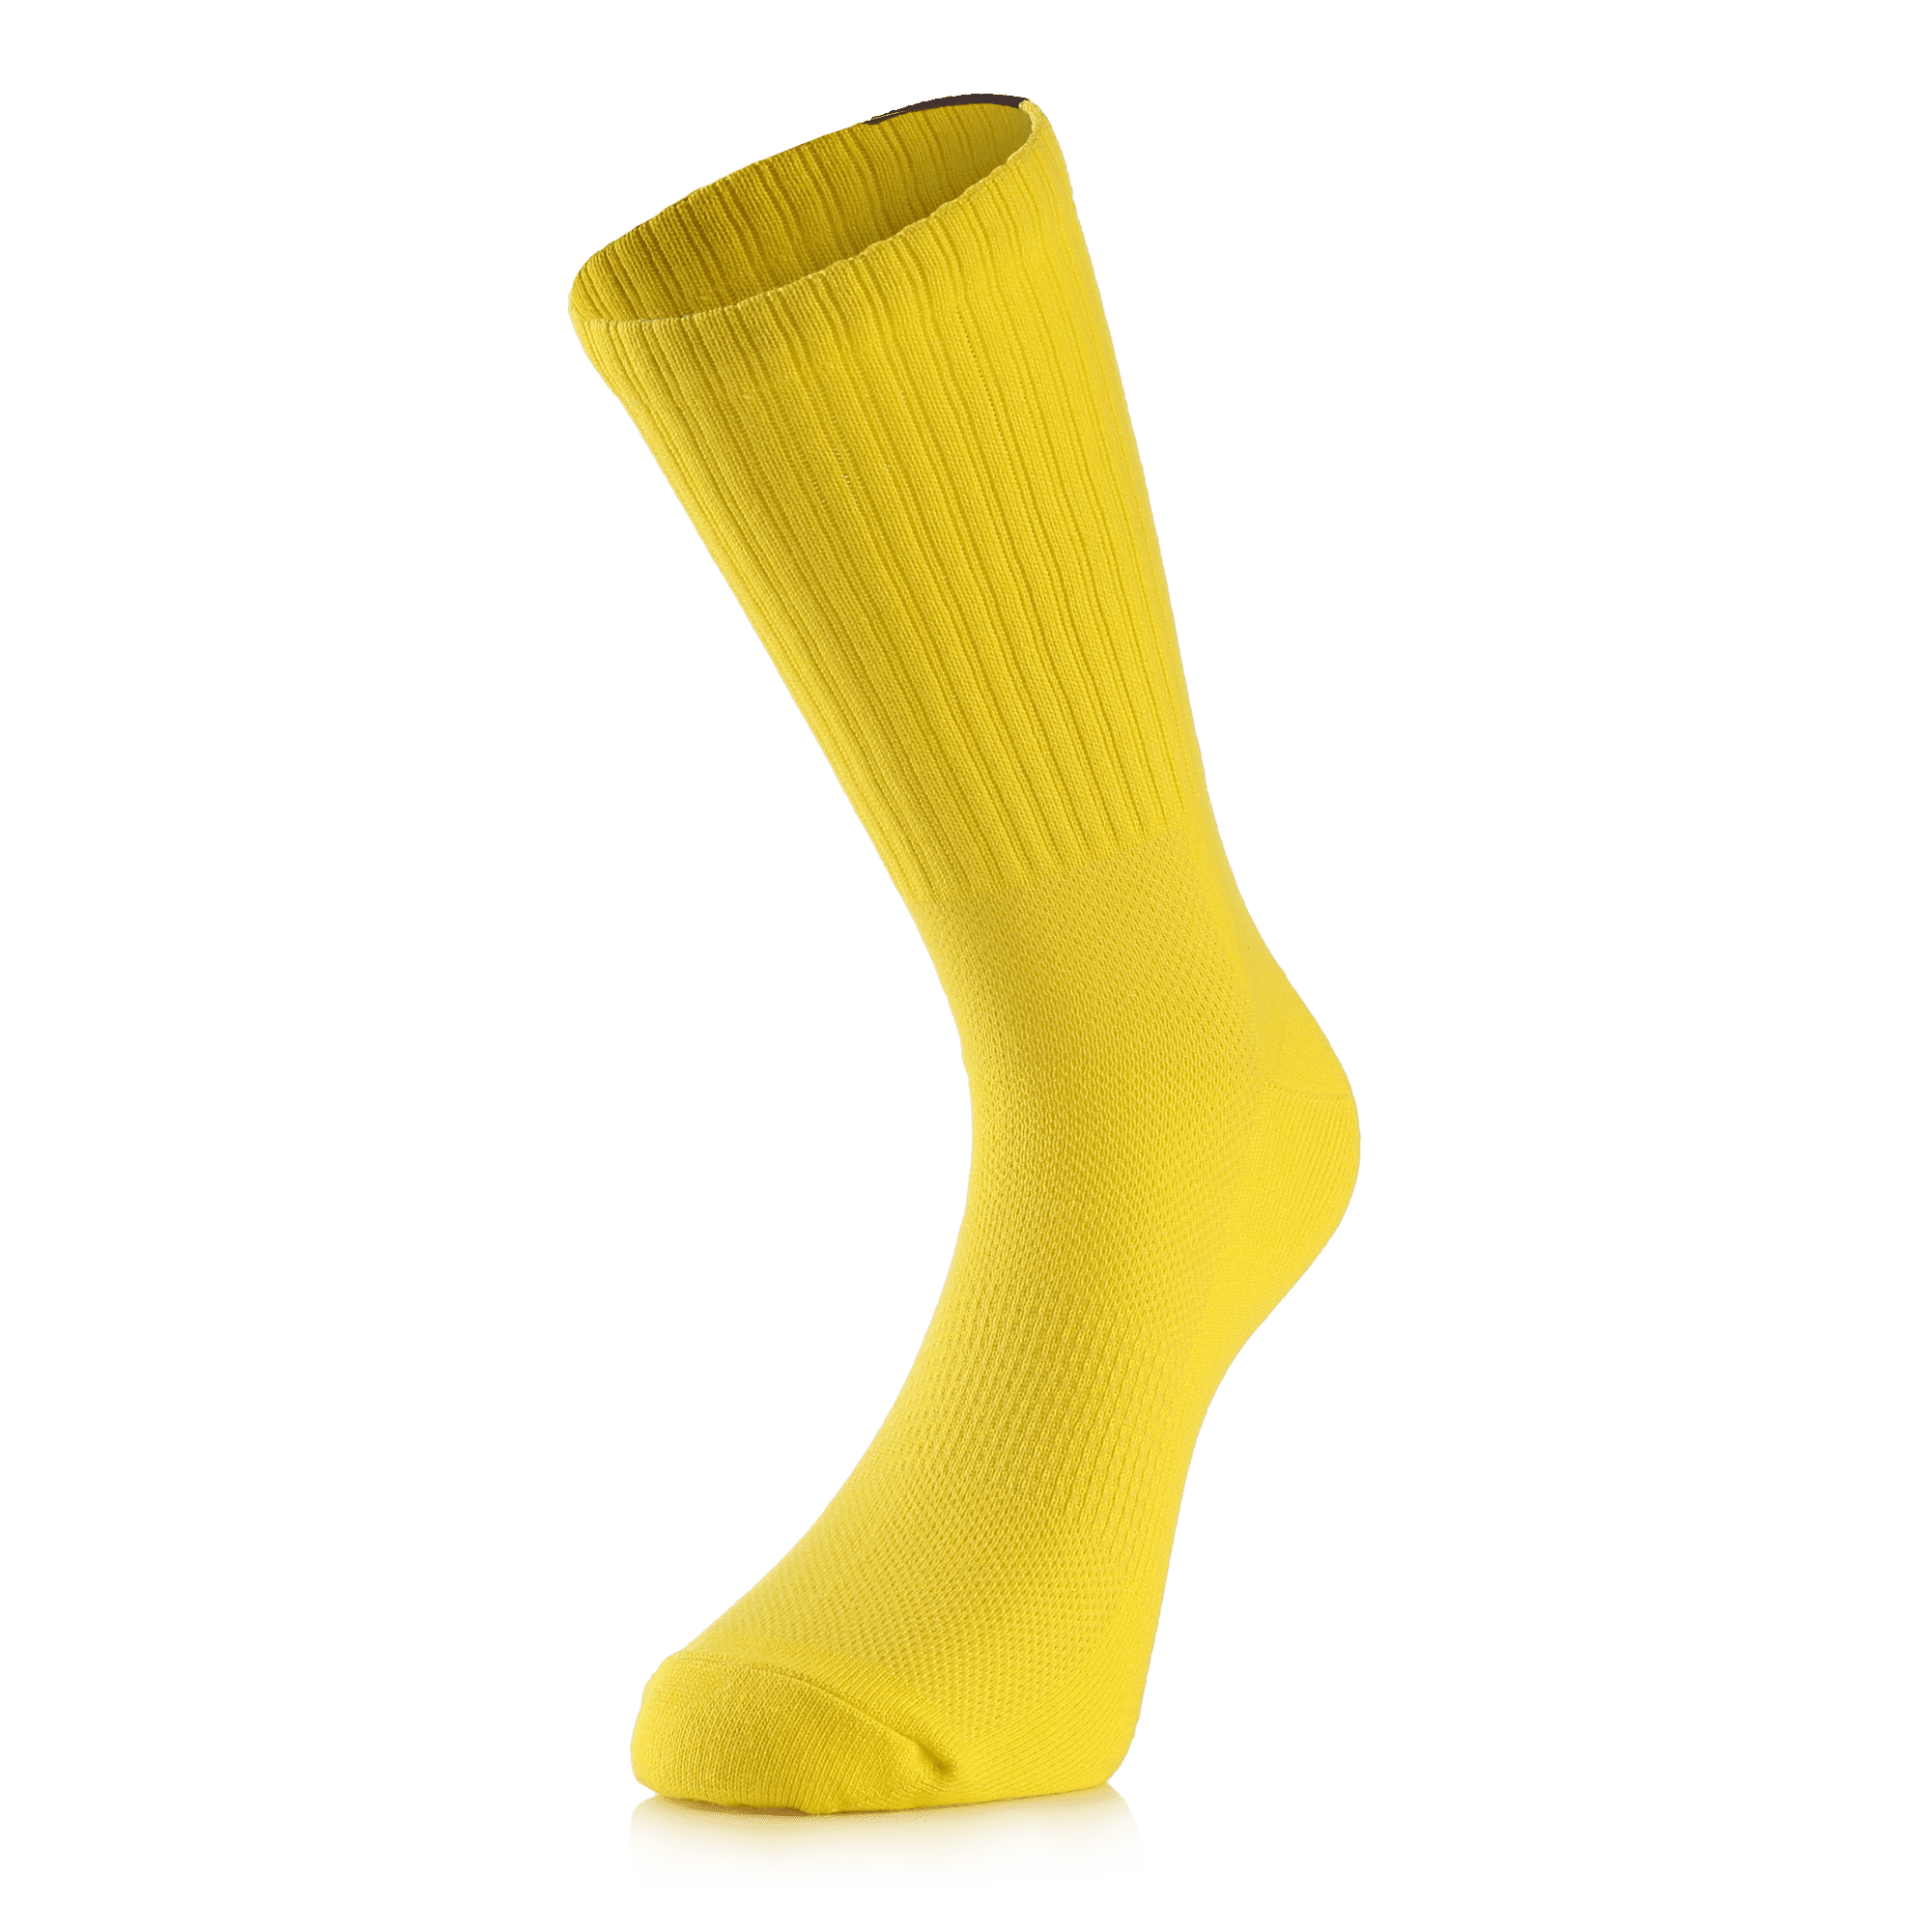 BU1 sports socks yellow